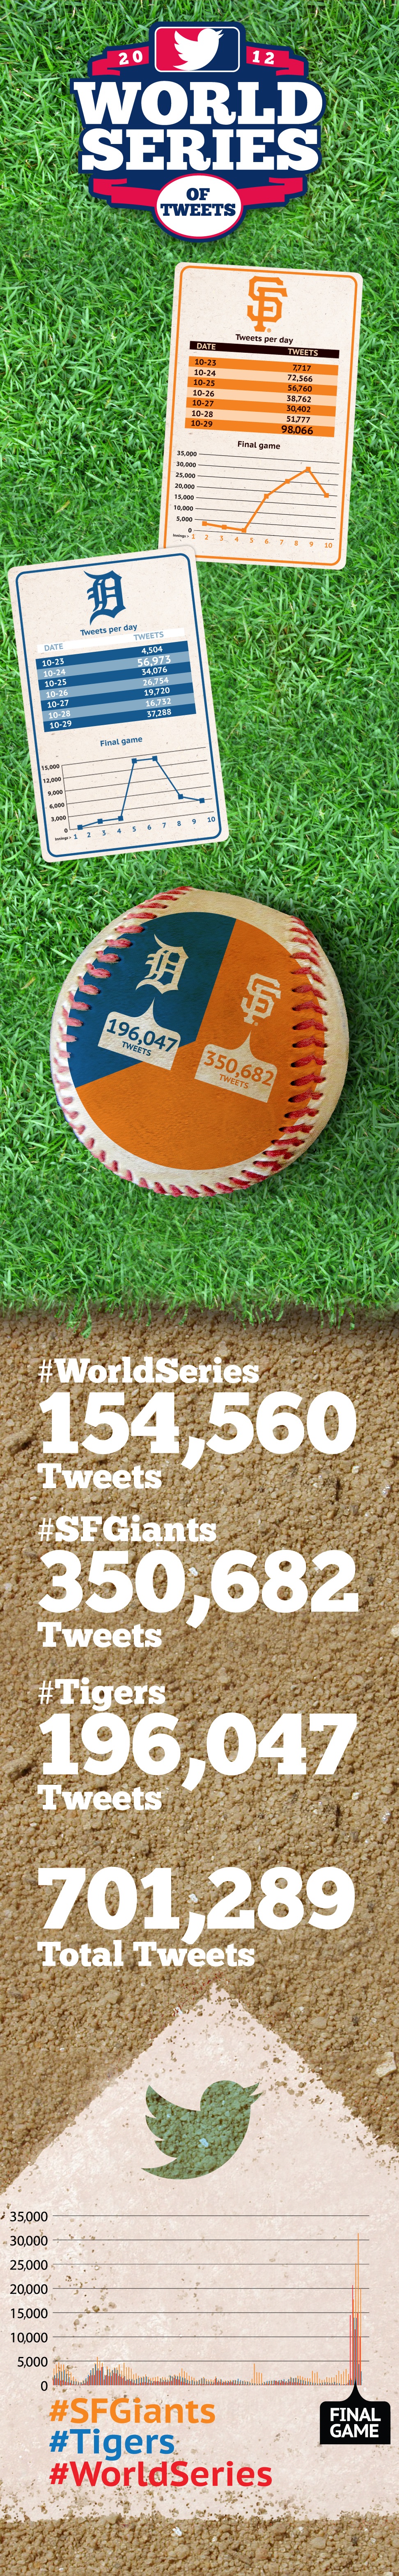 World Series-Social Media In Sports